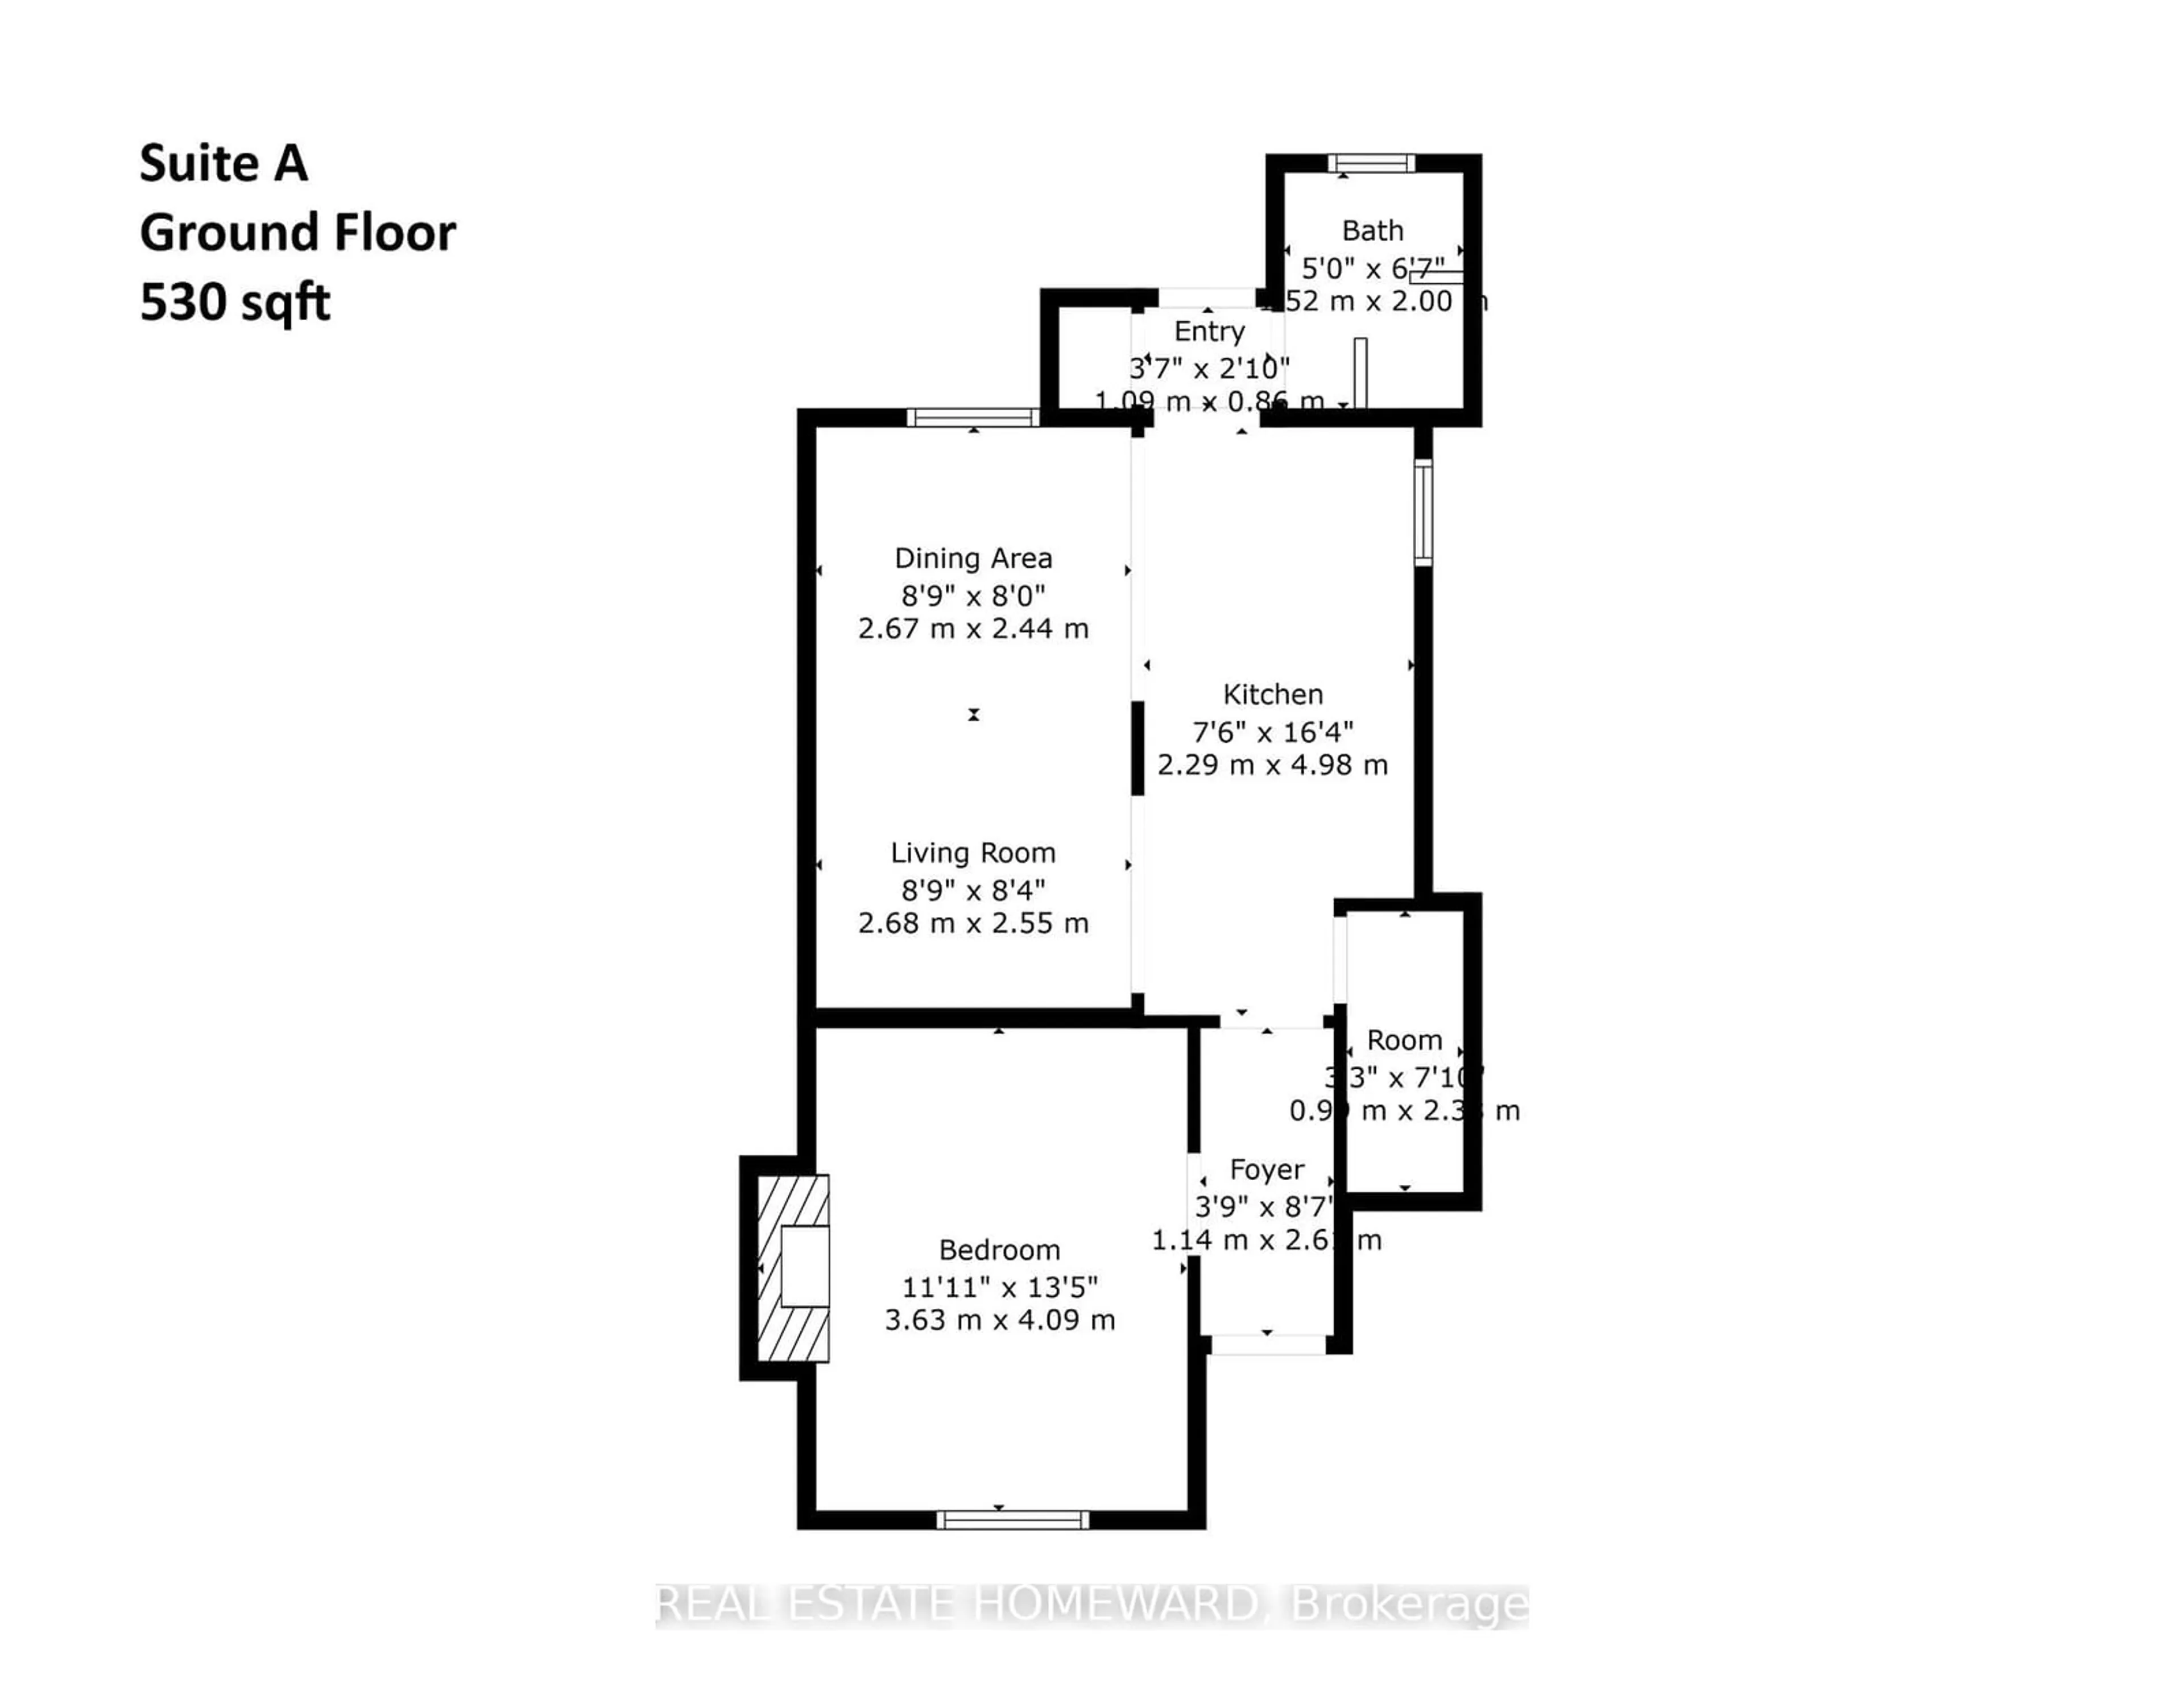 Floor plan for 140 Millicent St, Toronto Ontario M6H 1W4